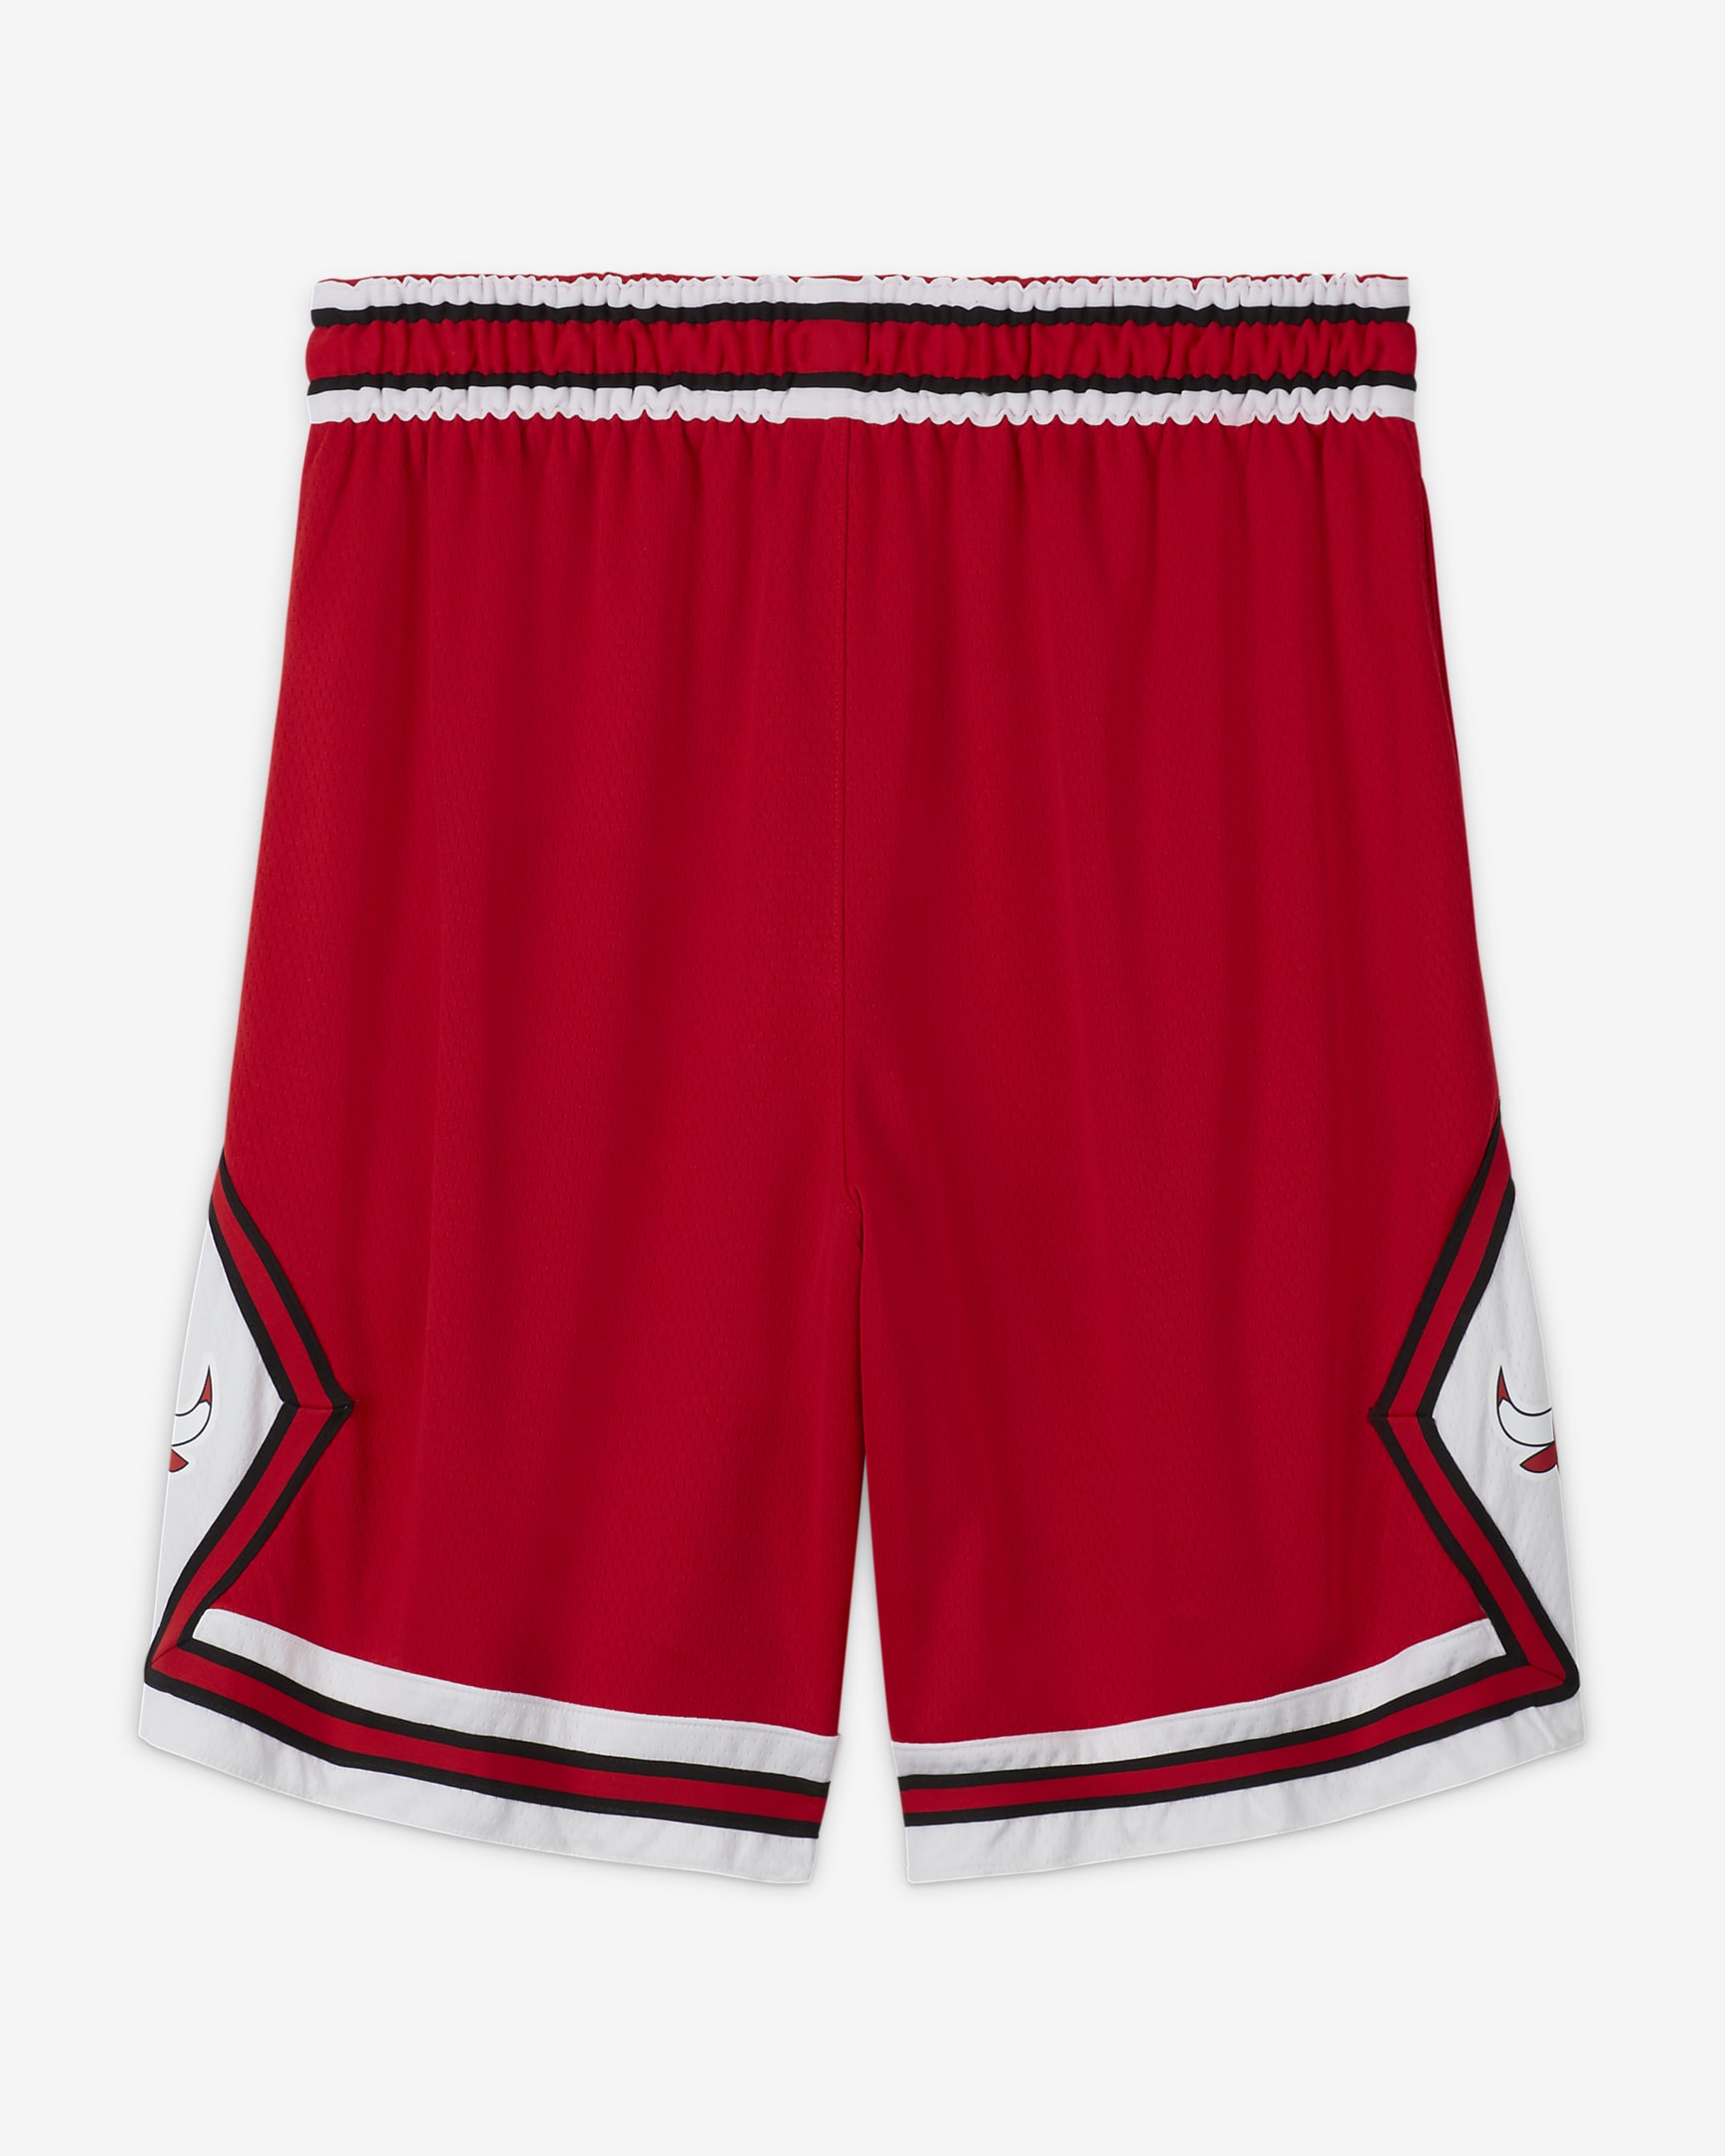 Chicago Bulls Icon Edition Men's Nike NBA Swingman Shorts - University Red/White/White